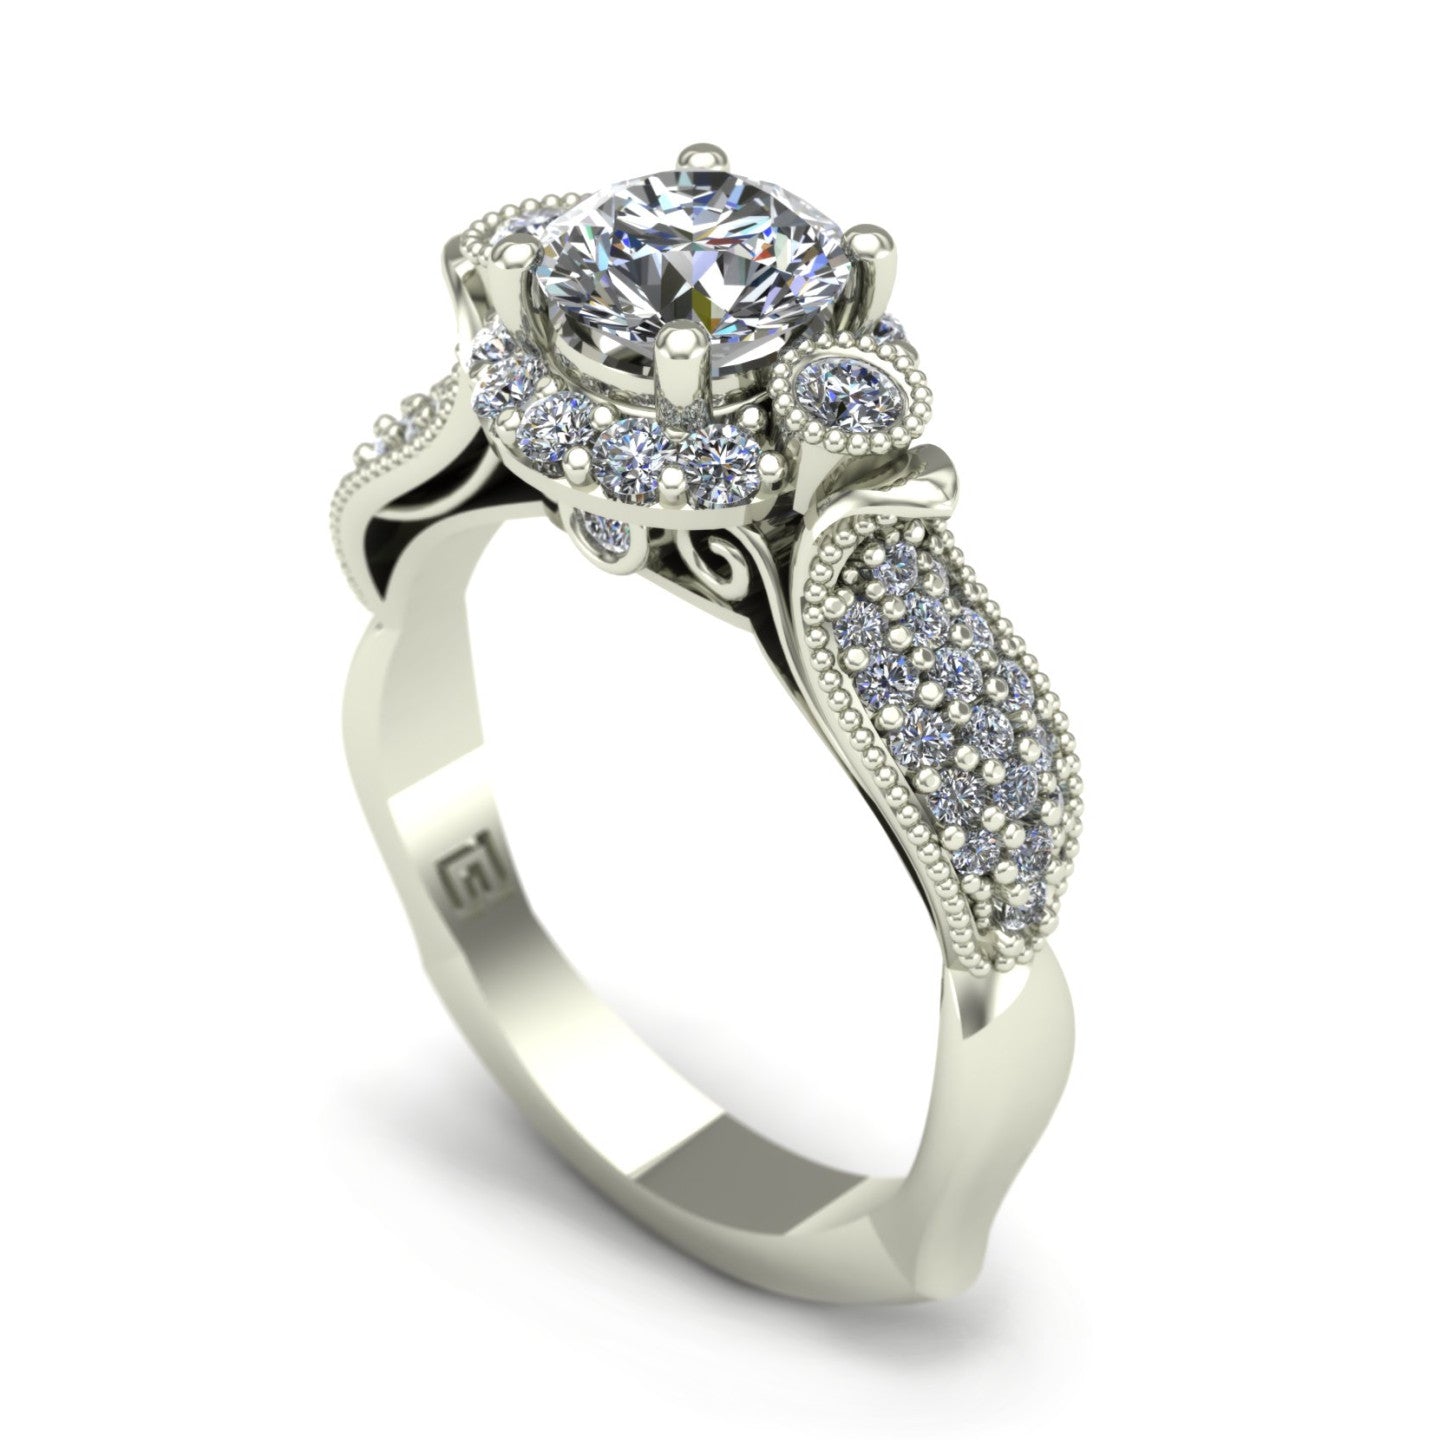 1ct diamond pavé engagement ring in 18k white gold - Charles Babb Designs